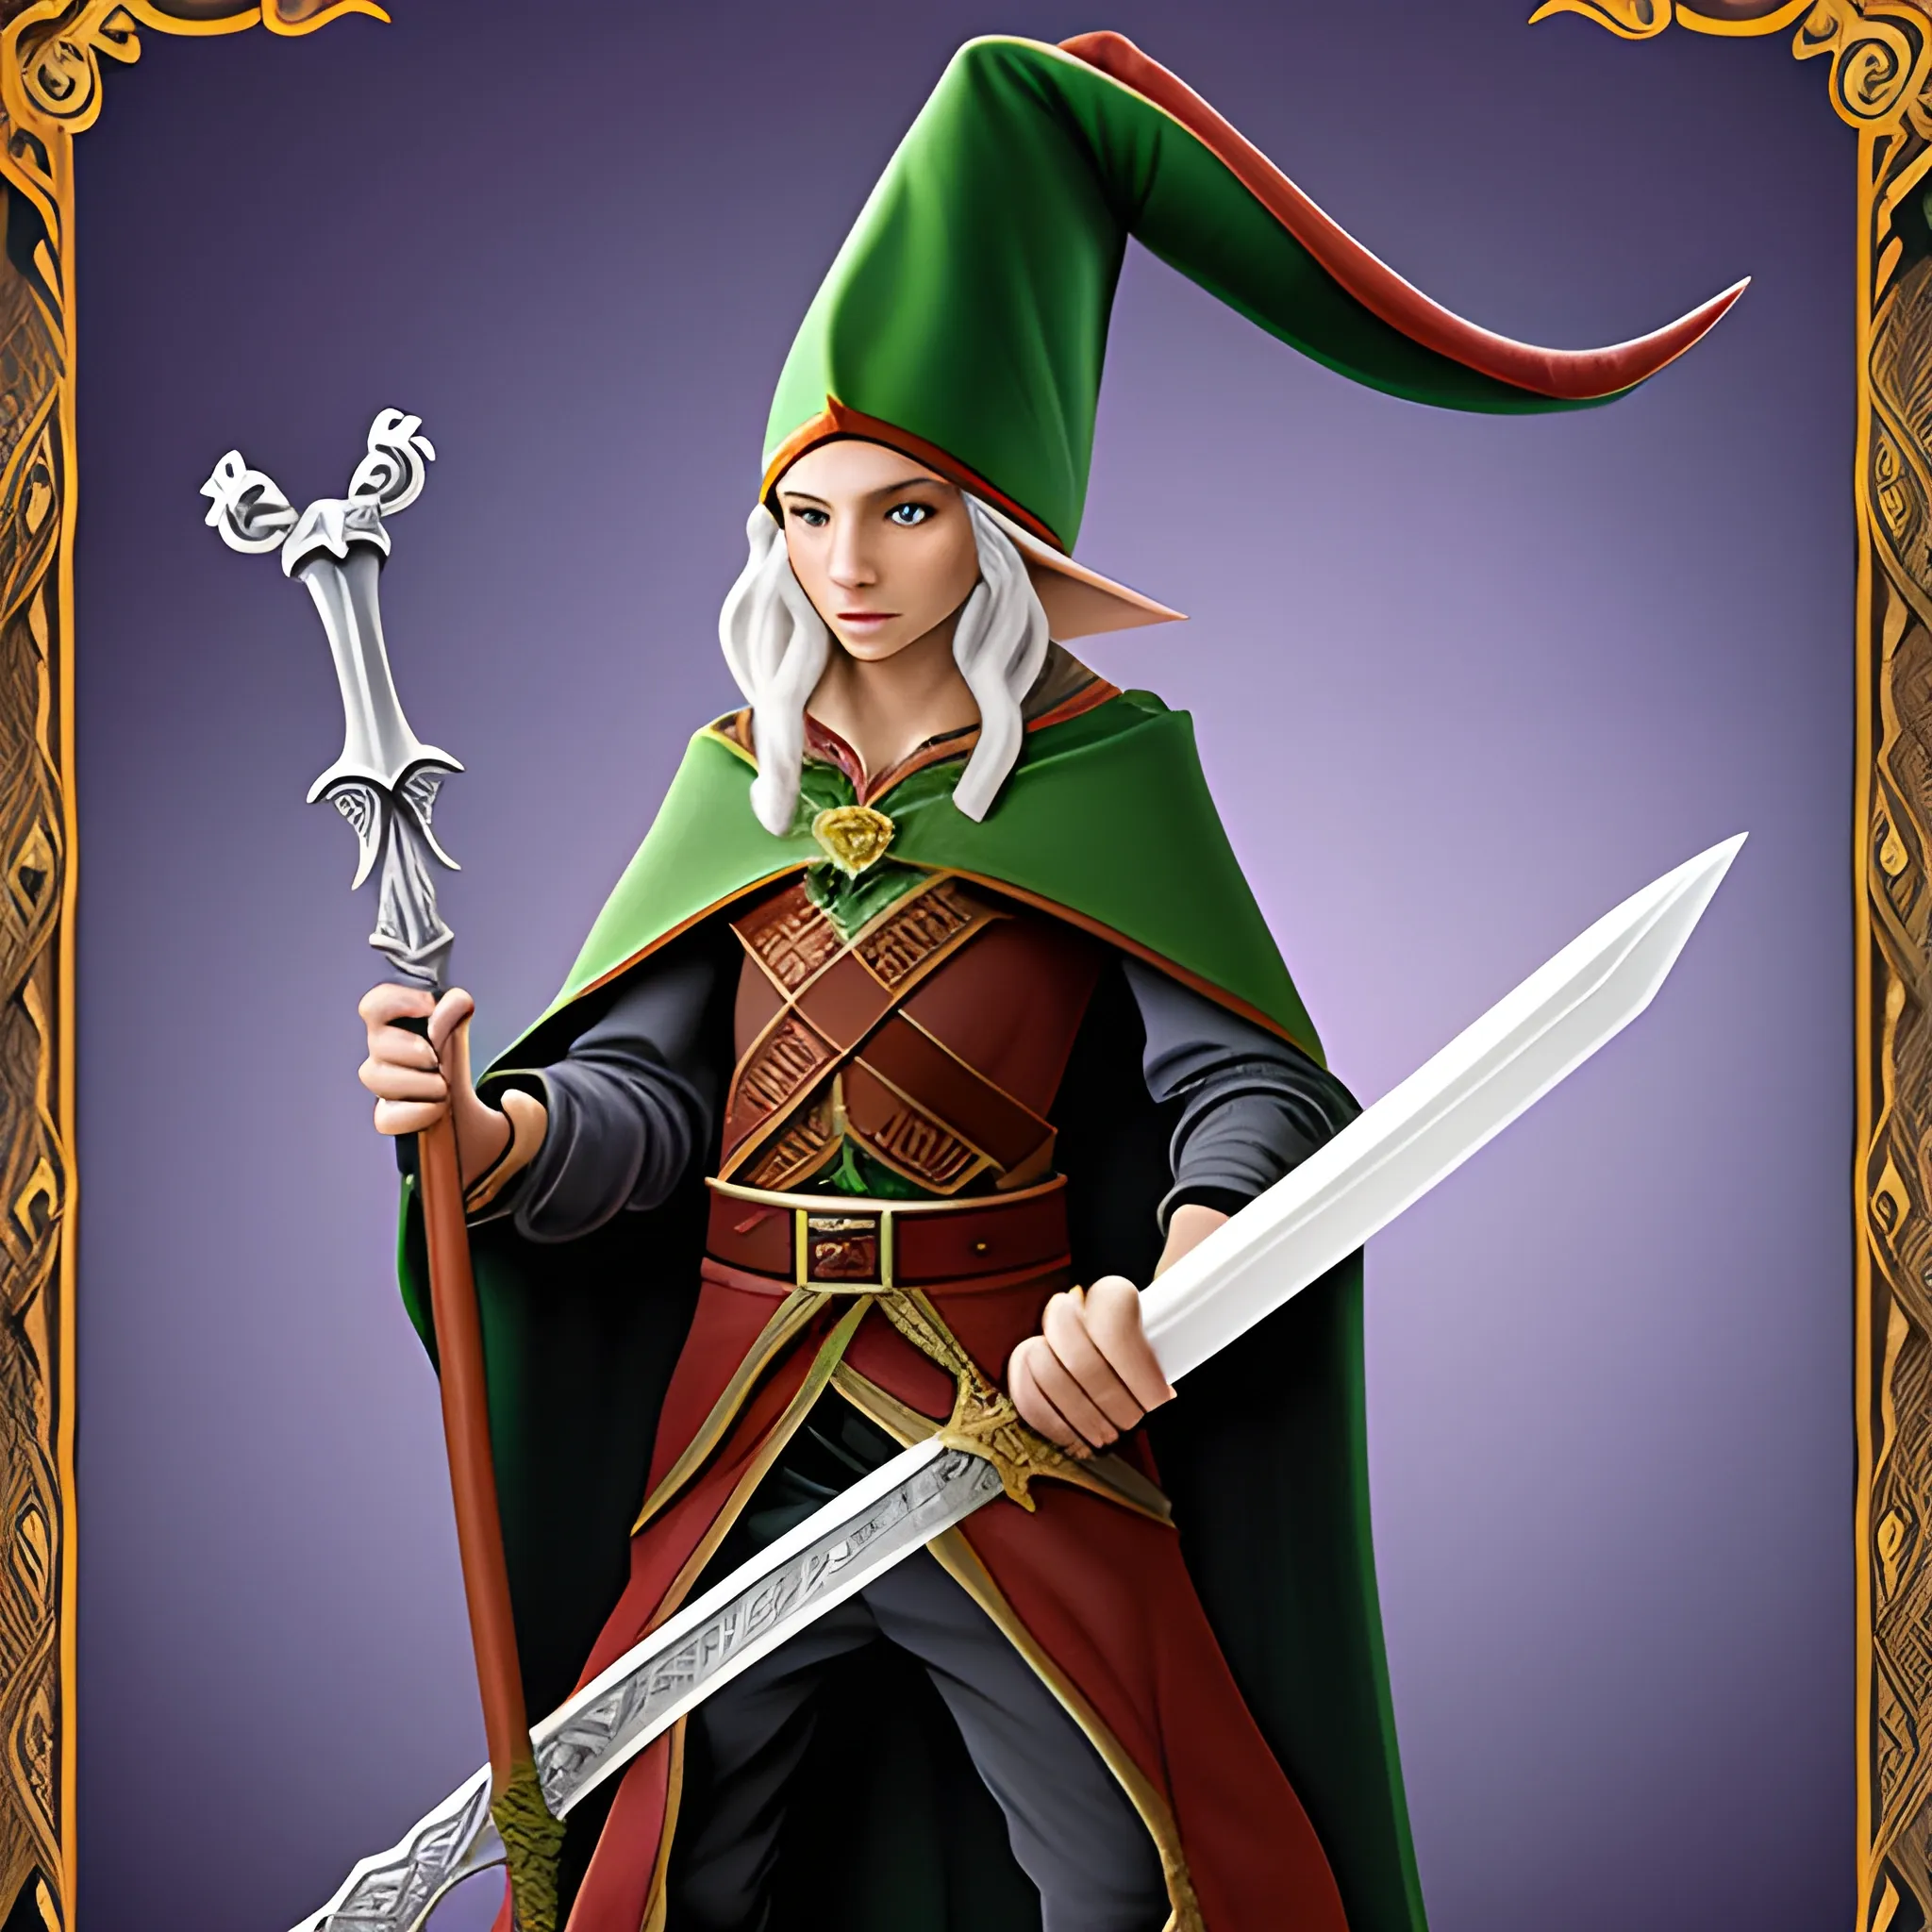 elf wizard with big hat and sword